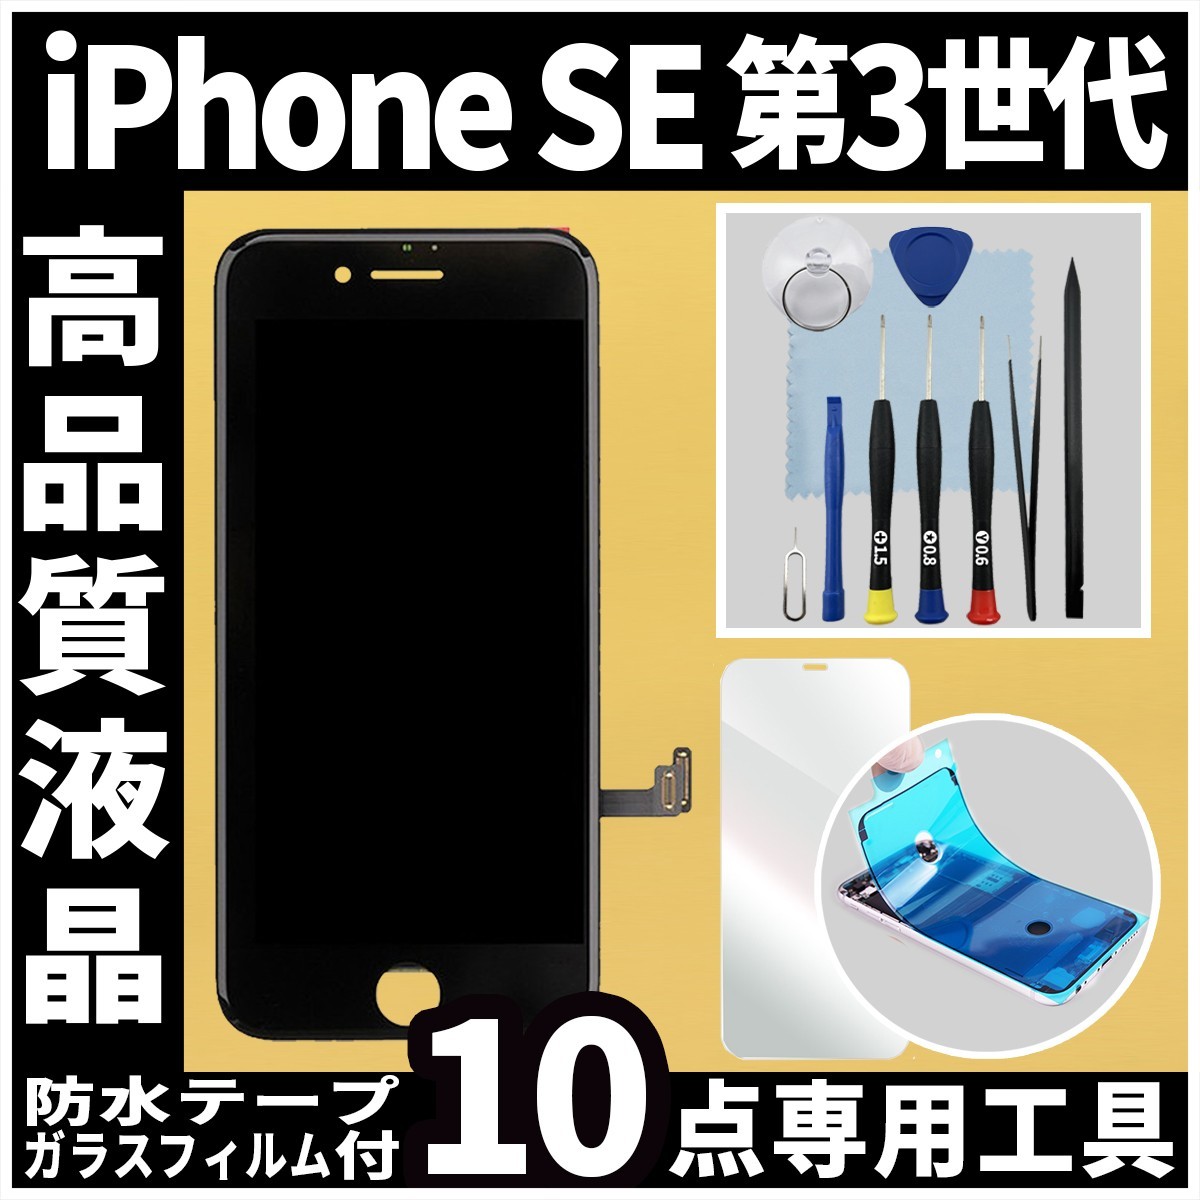 iPhoneSE3 高品質液晶 フロントパネル 黒 高品質AAA 互換品 LCD 業者 画面割れ 液晶 iphone 修理 ガラス割れ 交換 防水テープ タッチ_画像1